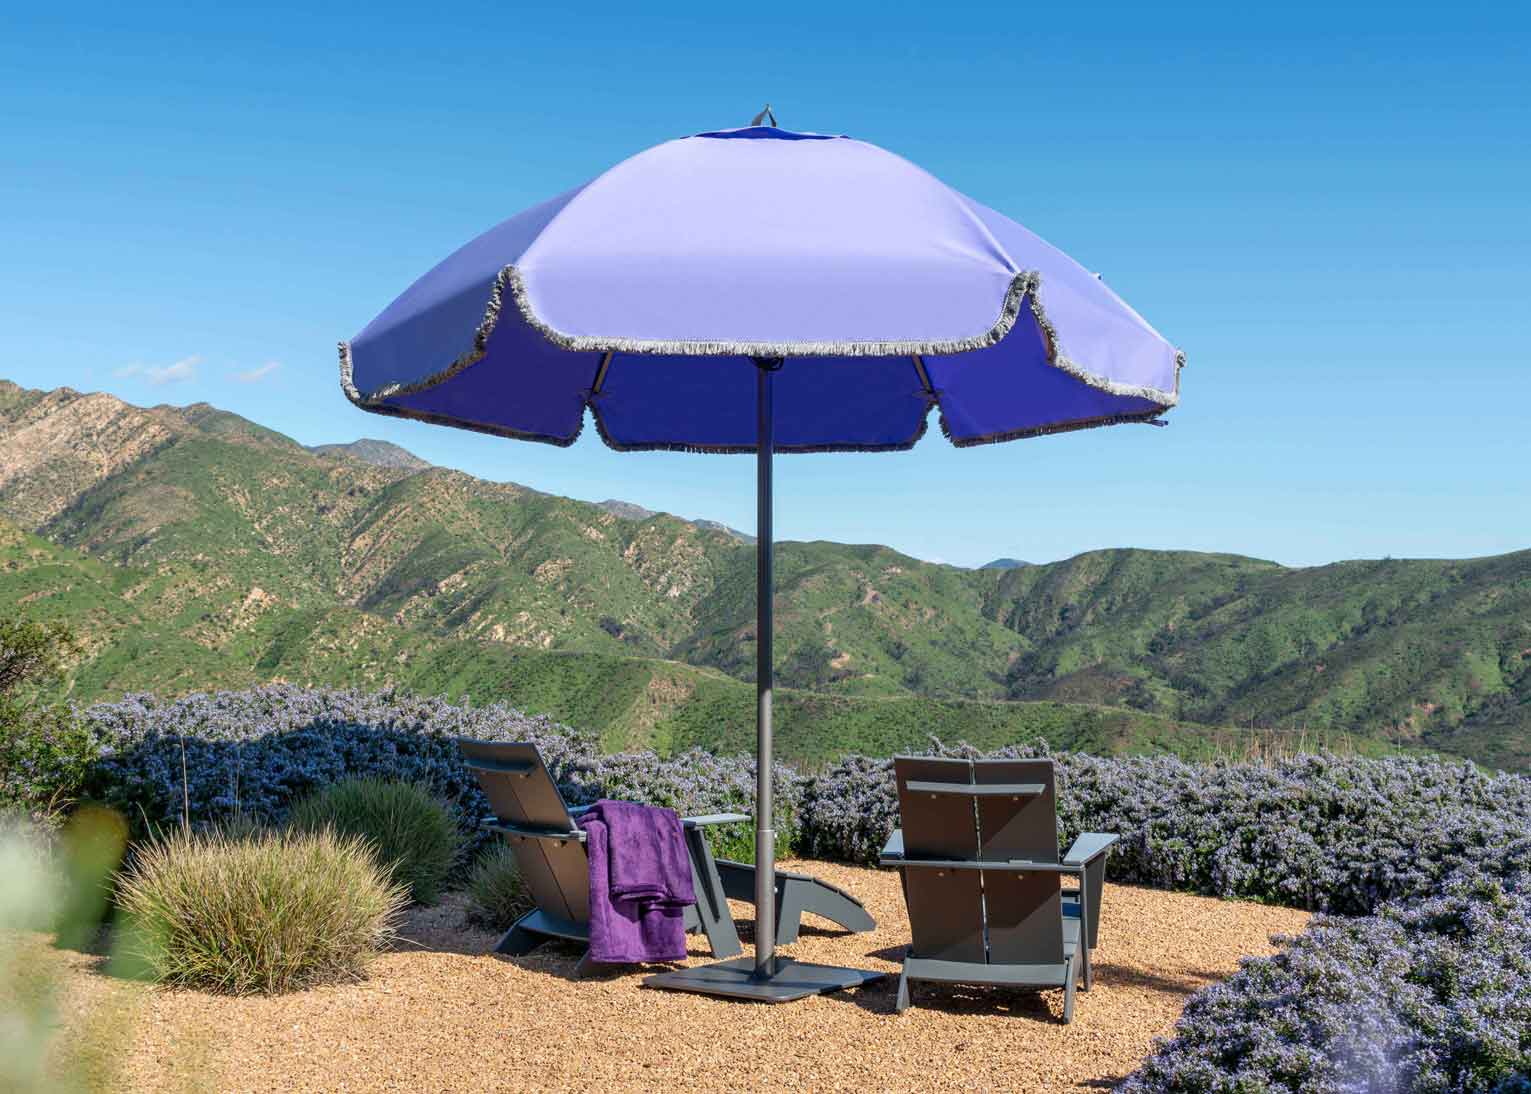 Image of Santa Barbara umbrella